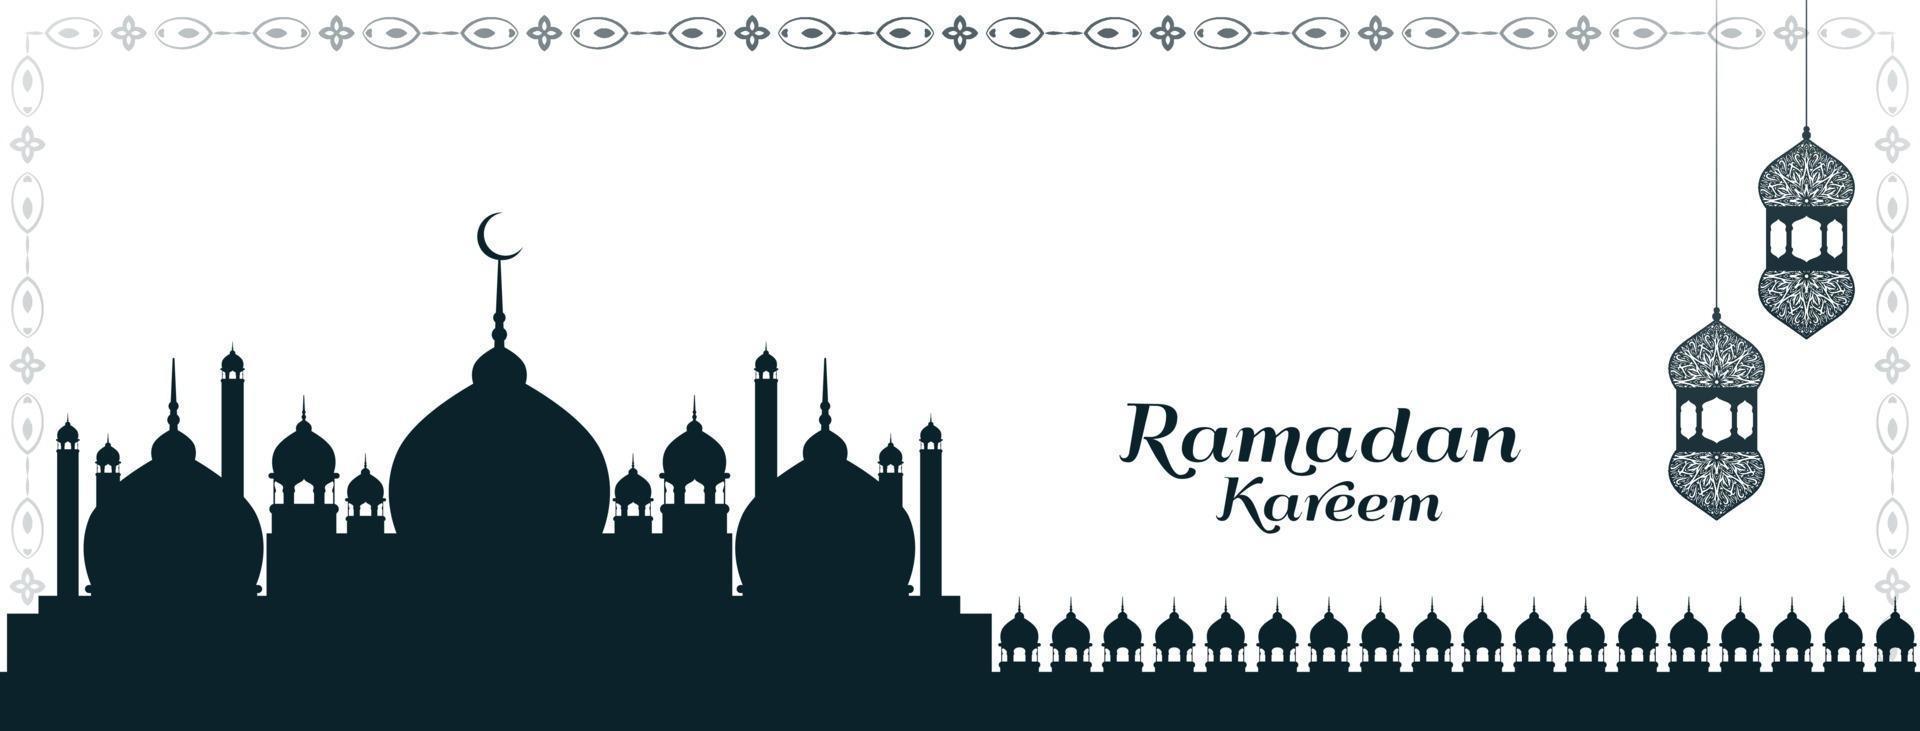 festival cultural ramadan kareem diseño de banner islámico vector